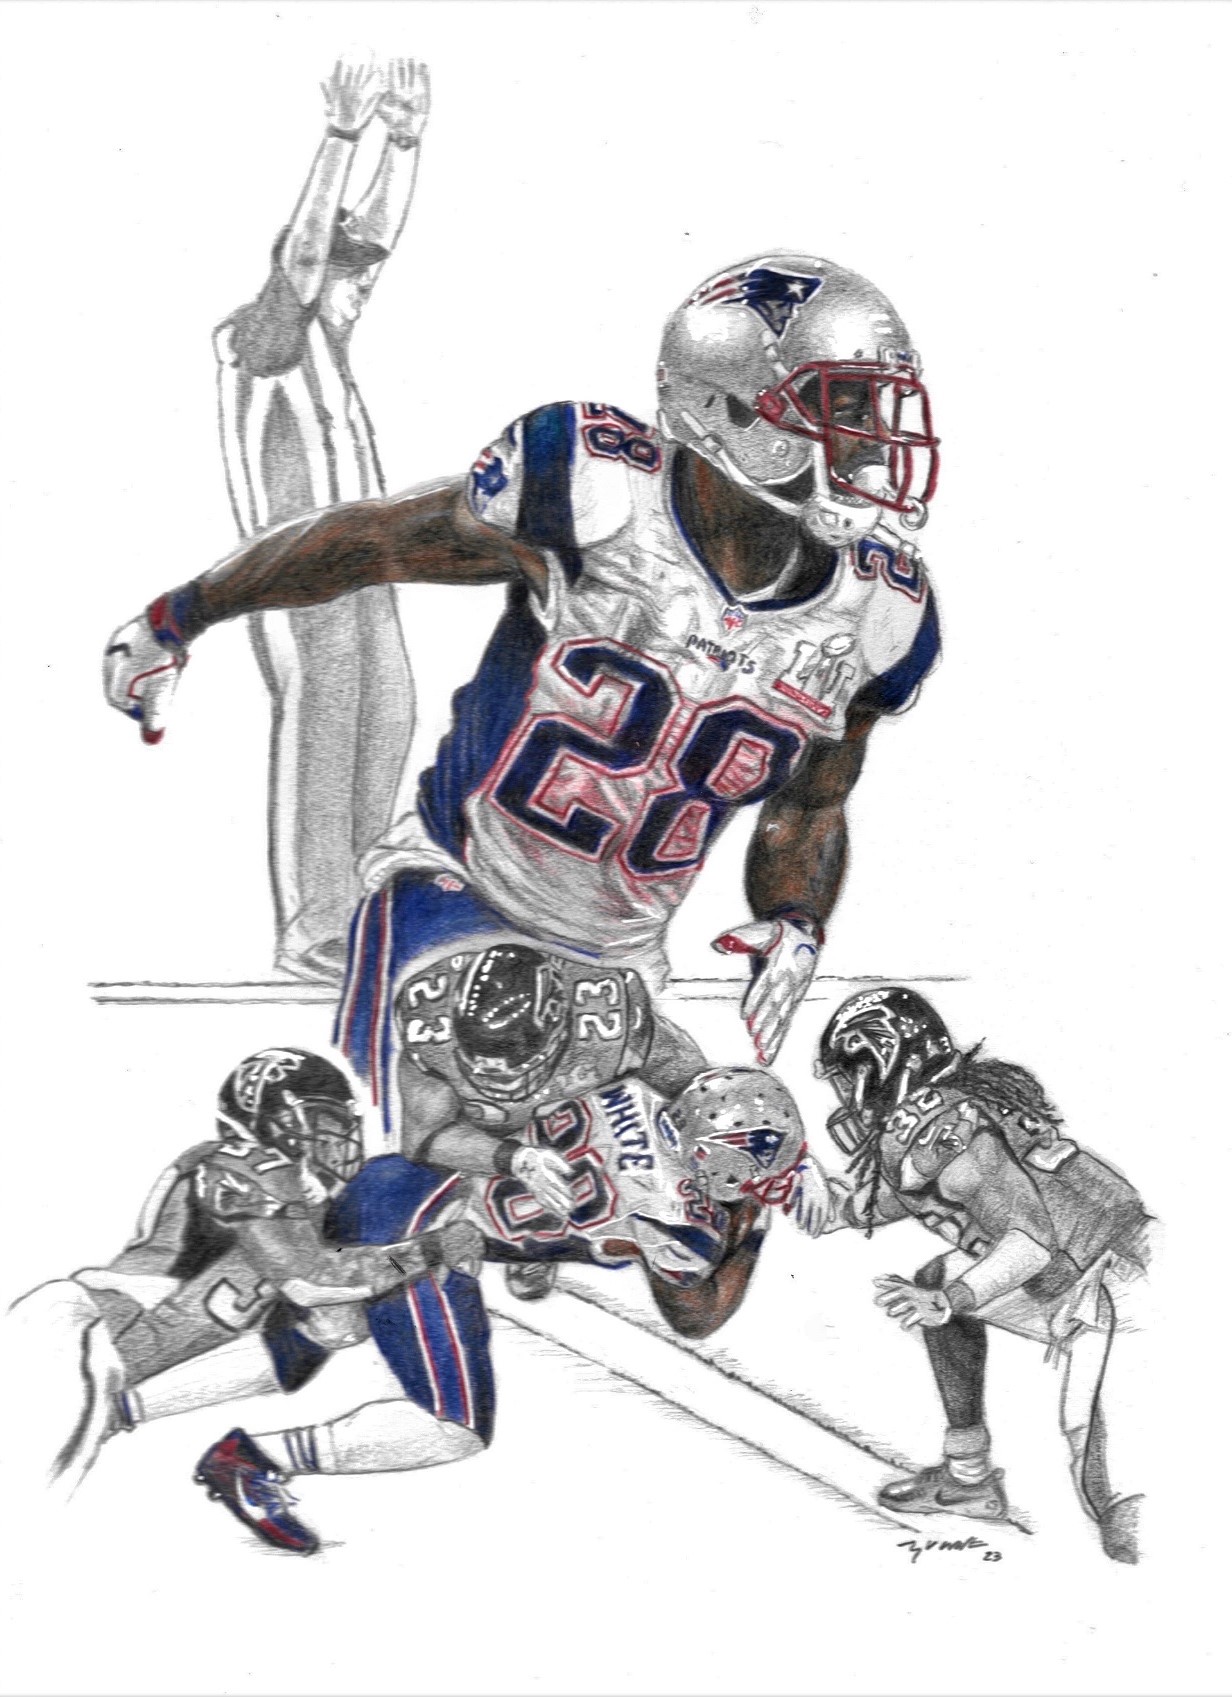 Sketch, Art, Portrait, New England Patriots, Running Back, James White, Super Bowl LI, Football